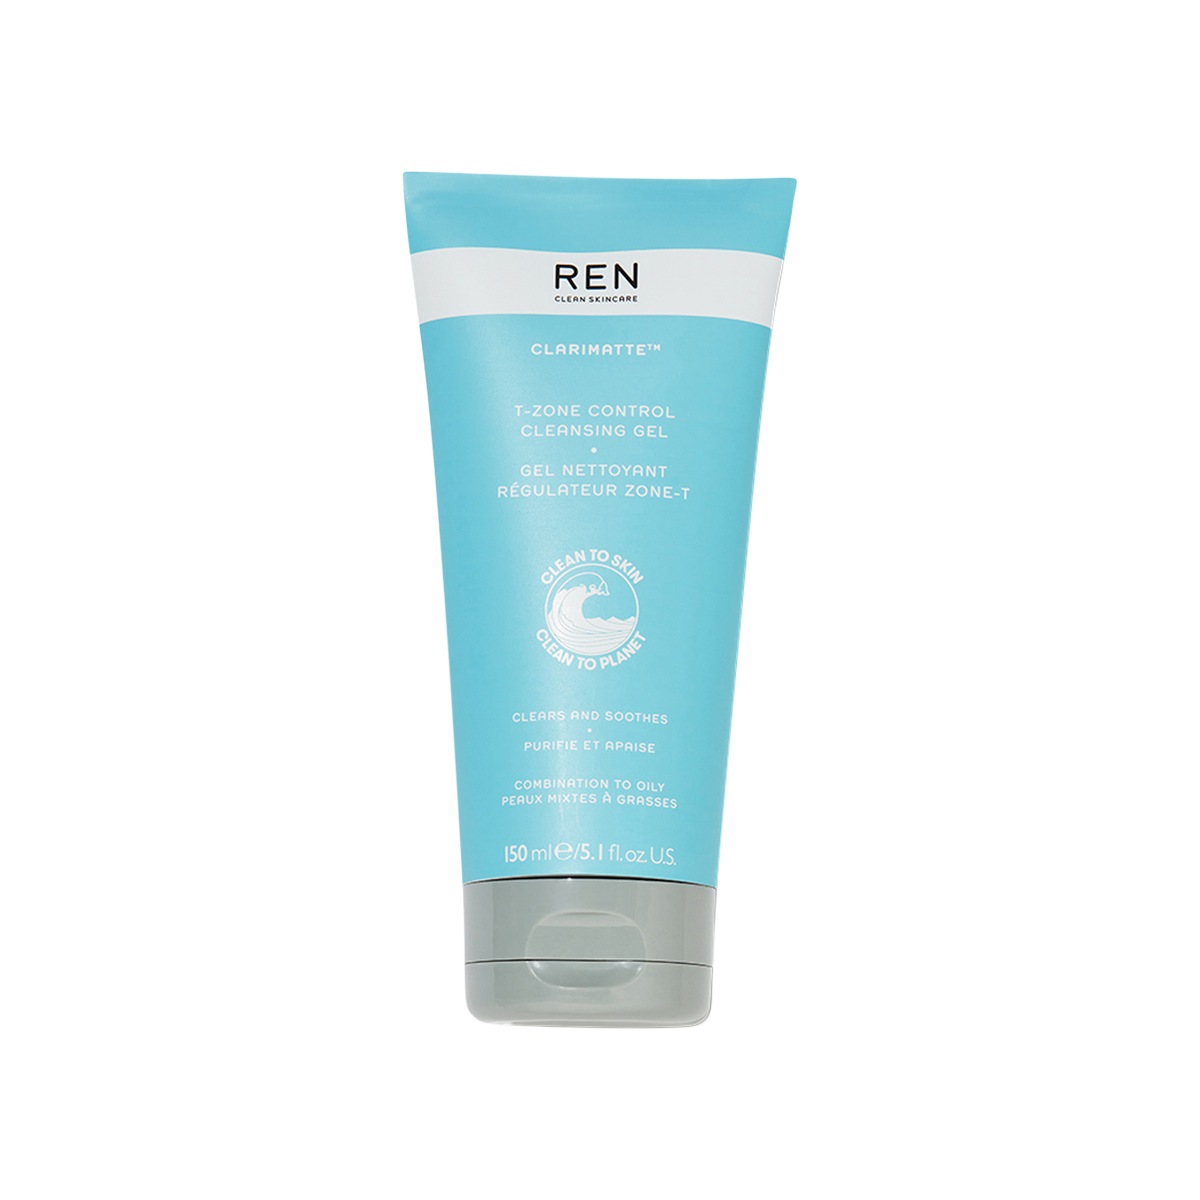 Ren Clean Skincare - Clarimatte T-Zone Control Cleansing Gel